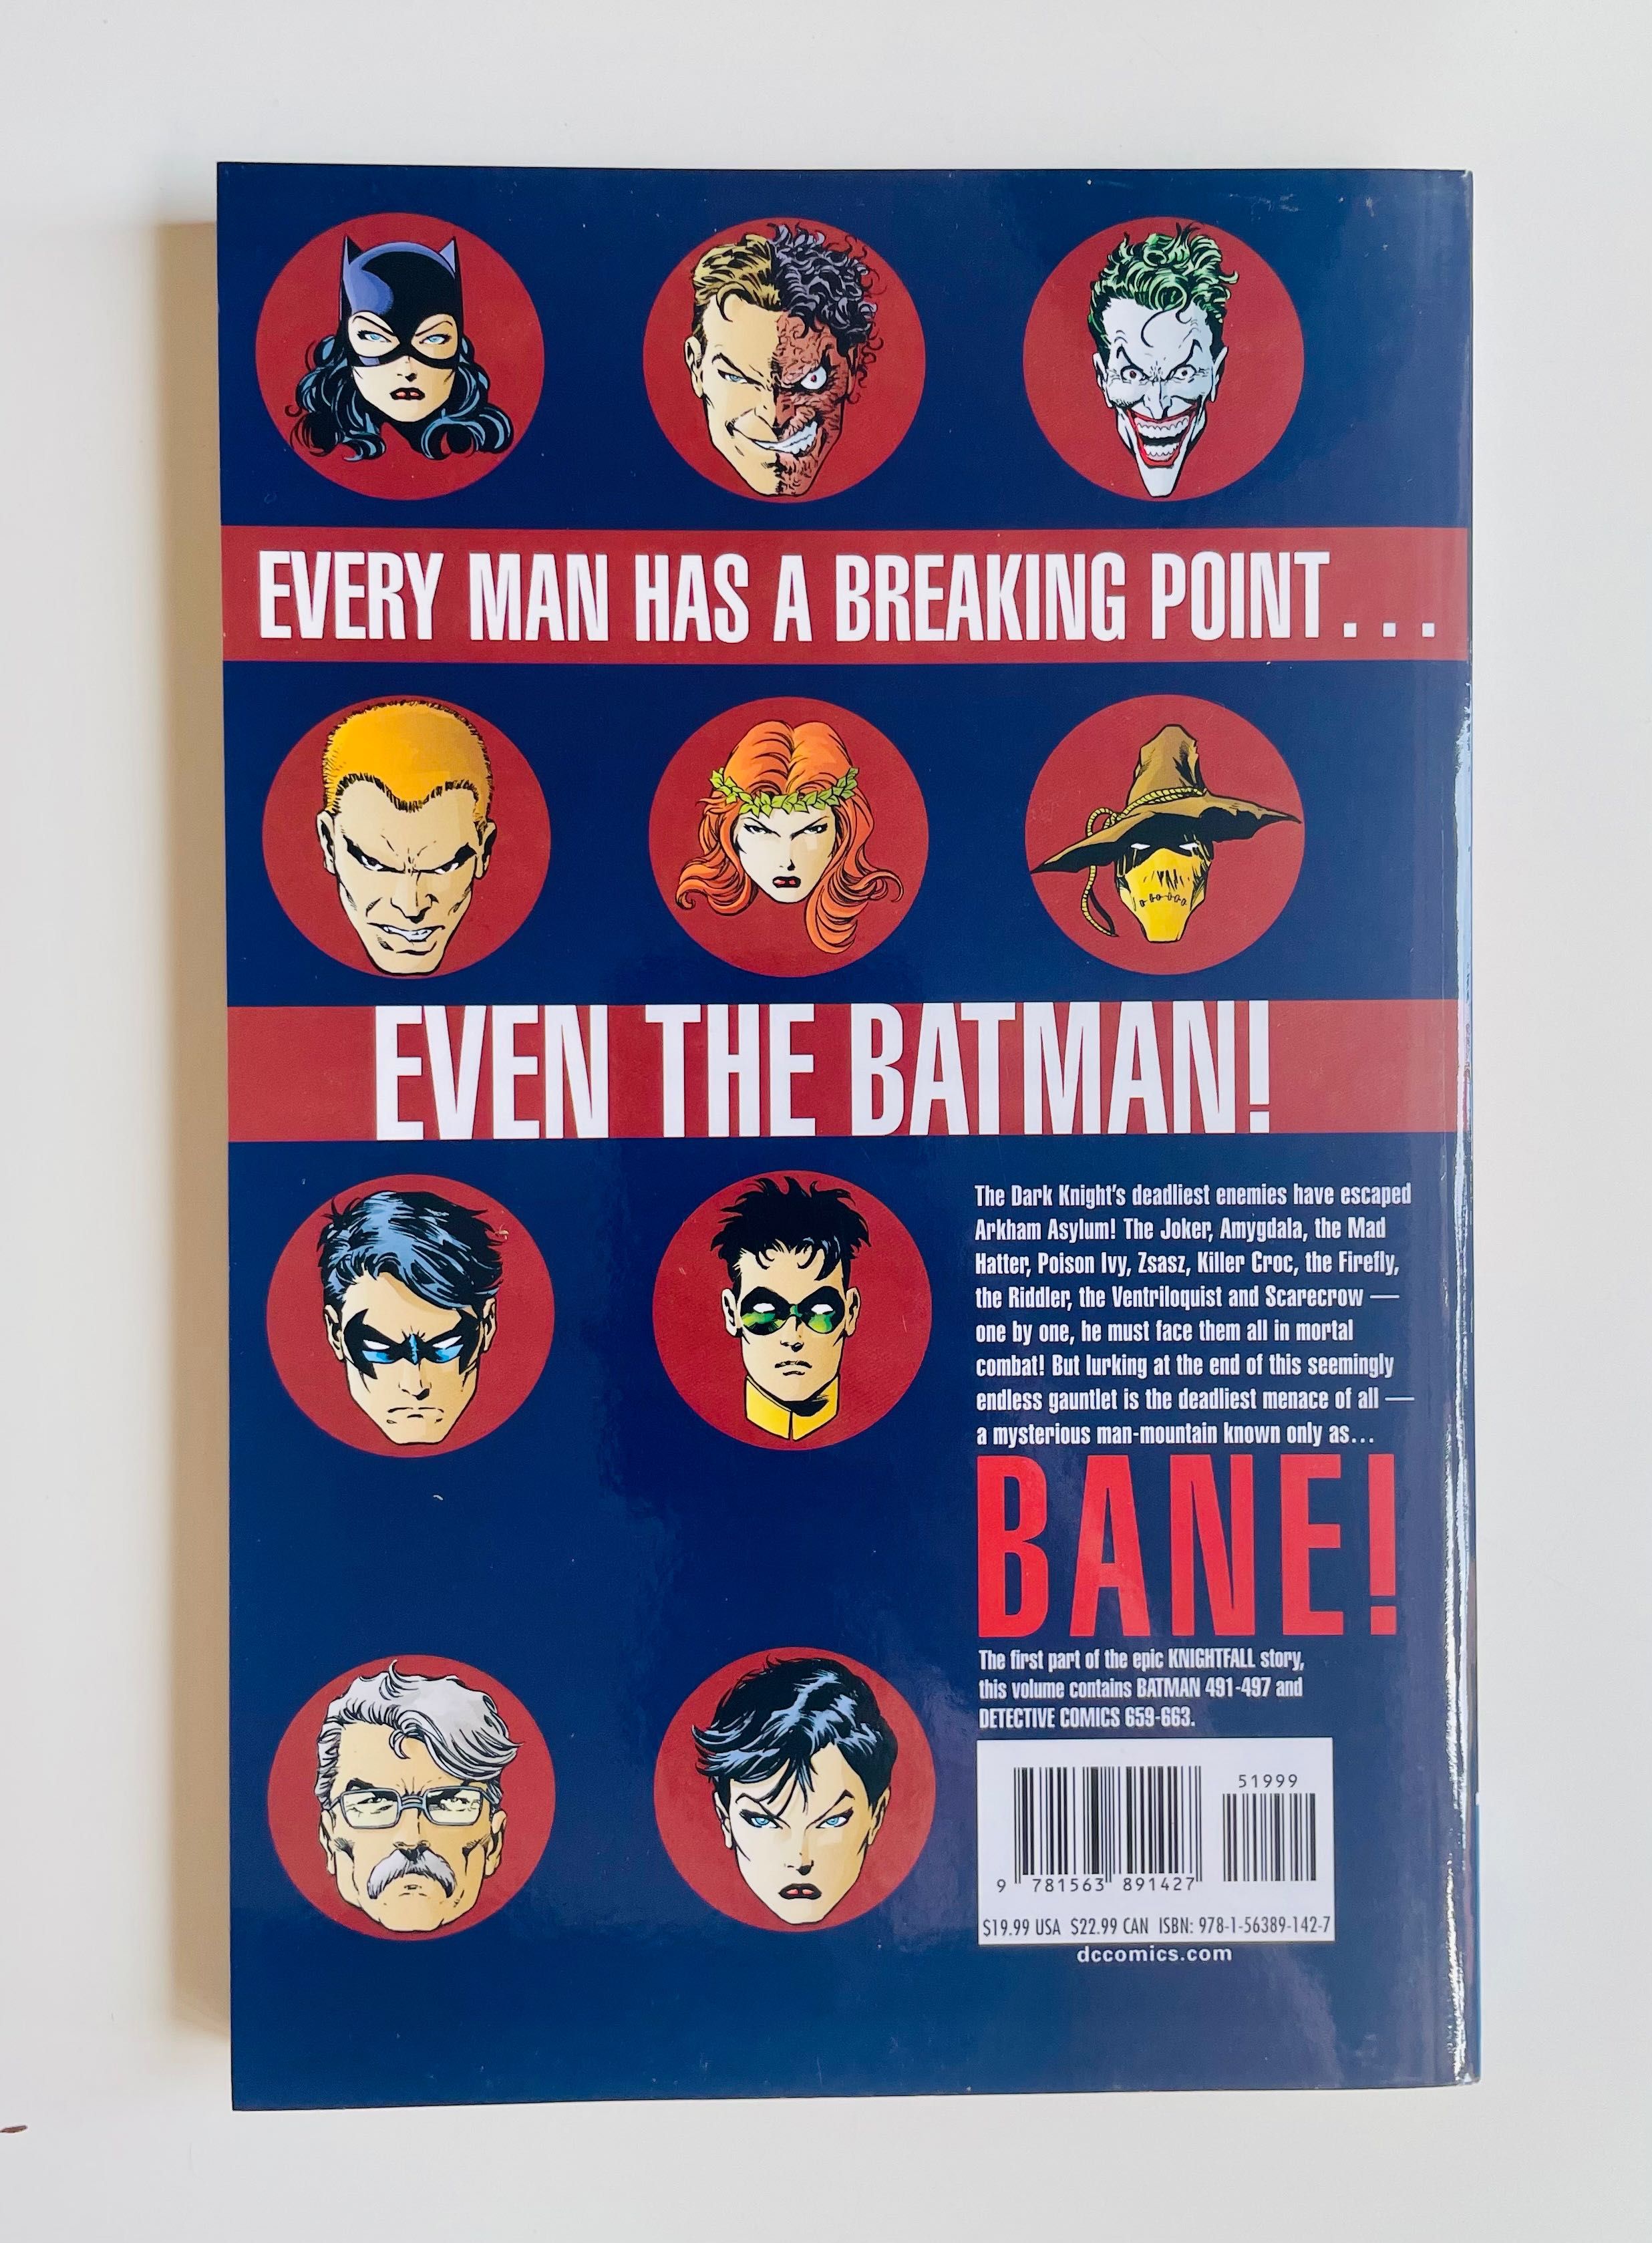 BATMAN Knightfall the part one: broken bat komiks j.ang. klasyka